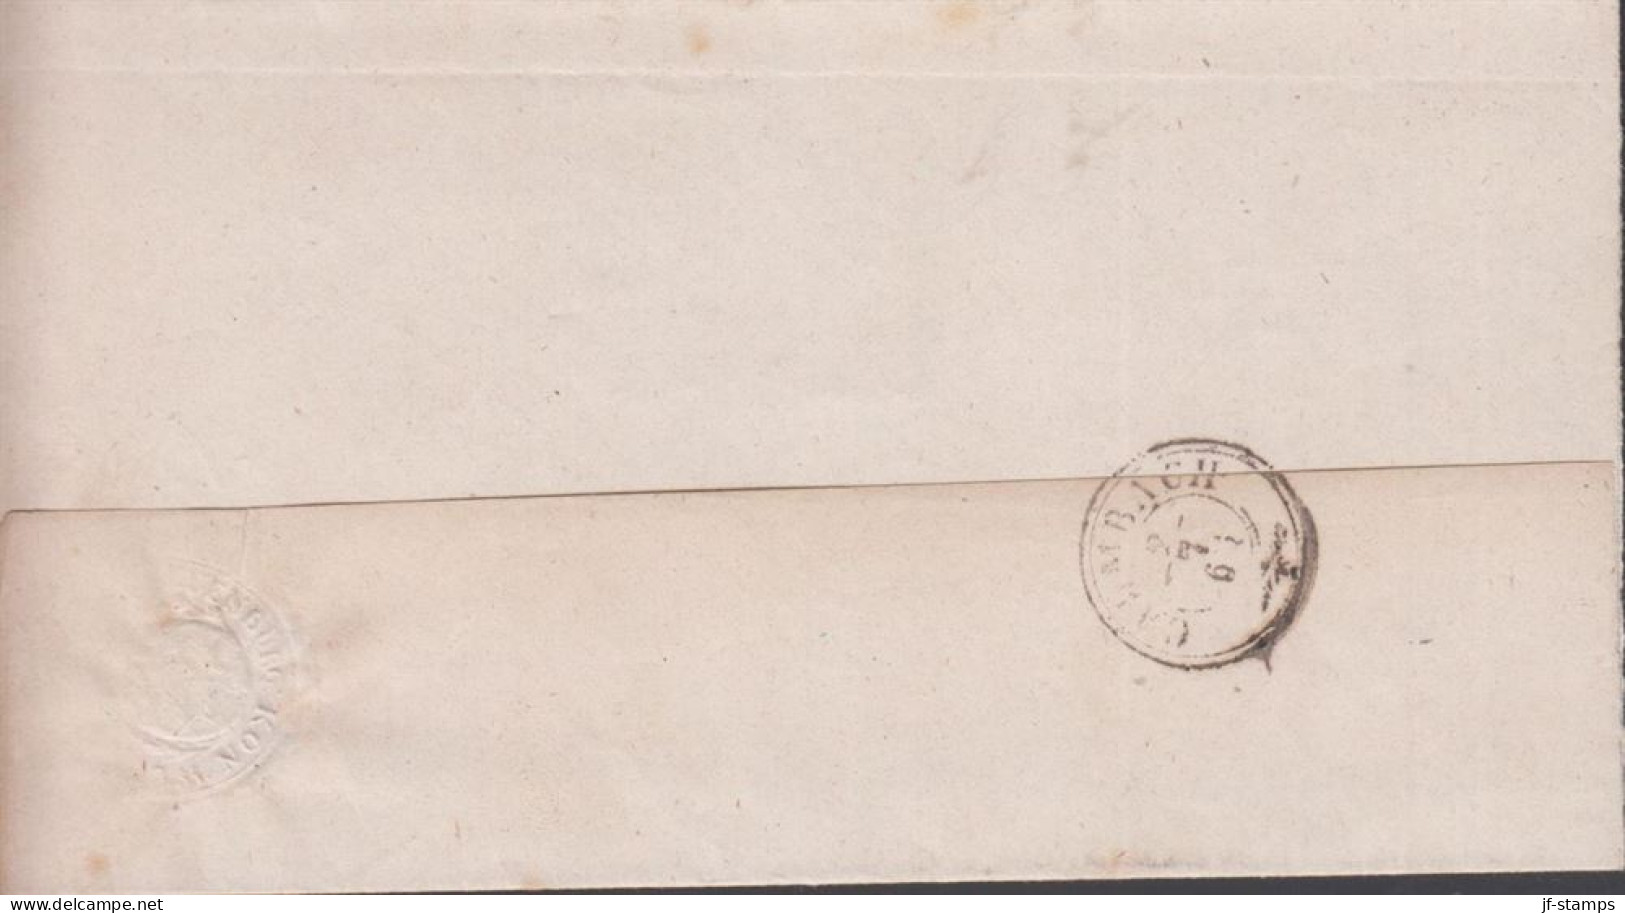 1863. DEUTSCHLAND. Very Interesting And Beautiful Cover Cancelled NEUENBURG 2 JUL 1863. Sender Cancel In G... - JF436619 - [Voorlopers